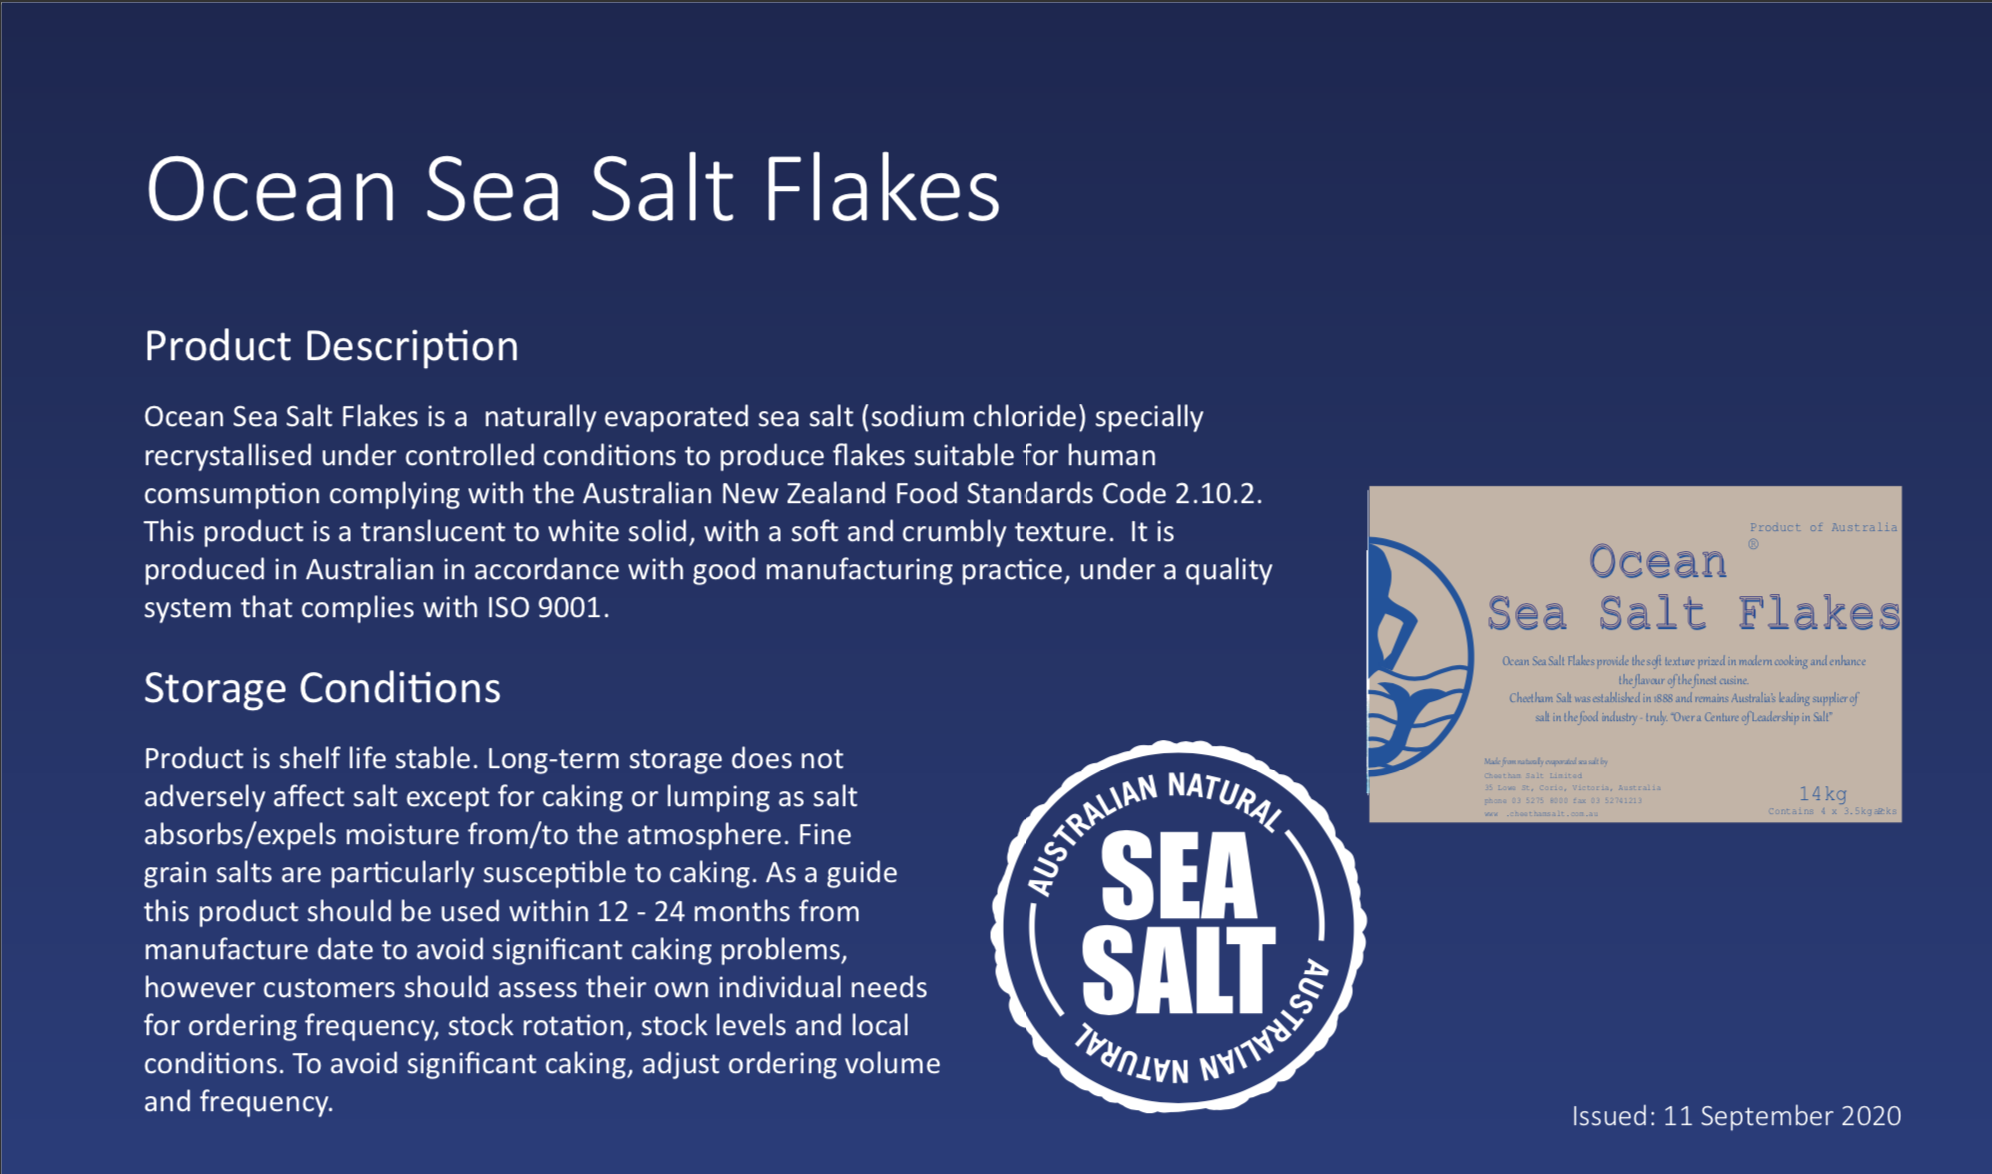 Ocean Sea Salt Flakes product description. The product description includes an image of the product and sotrage condition information.